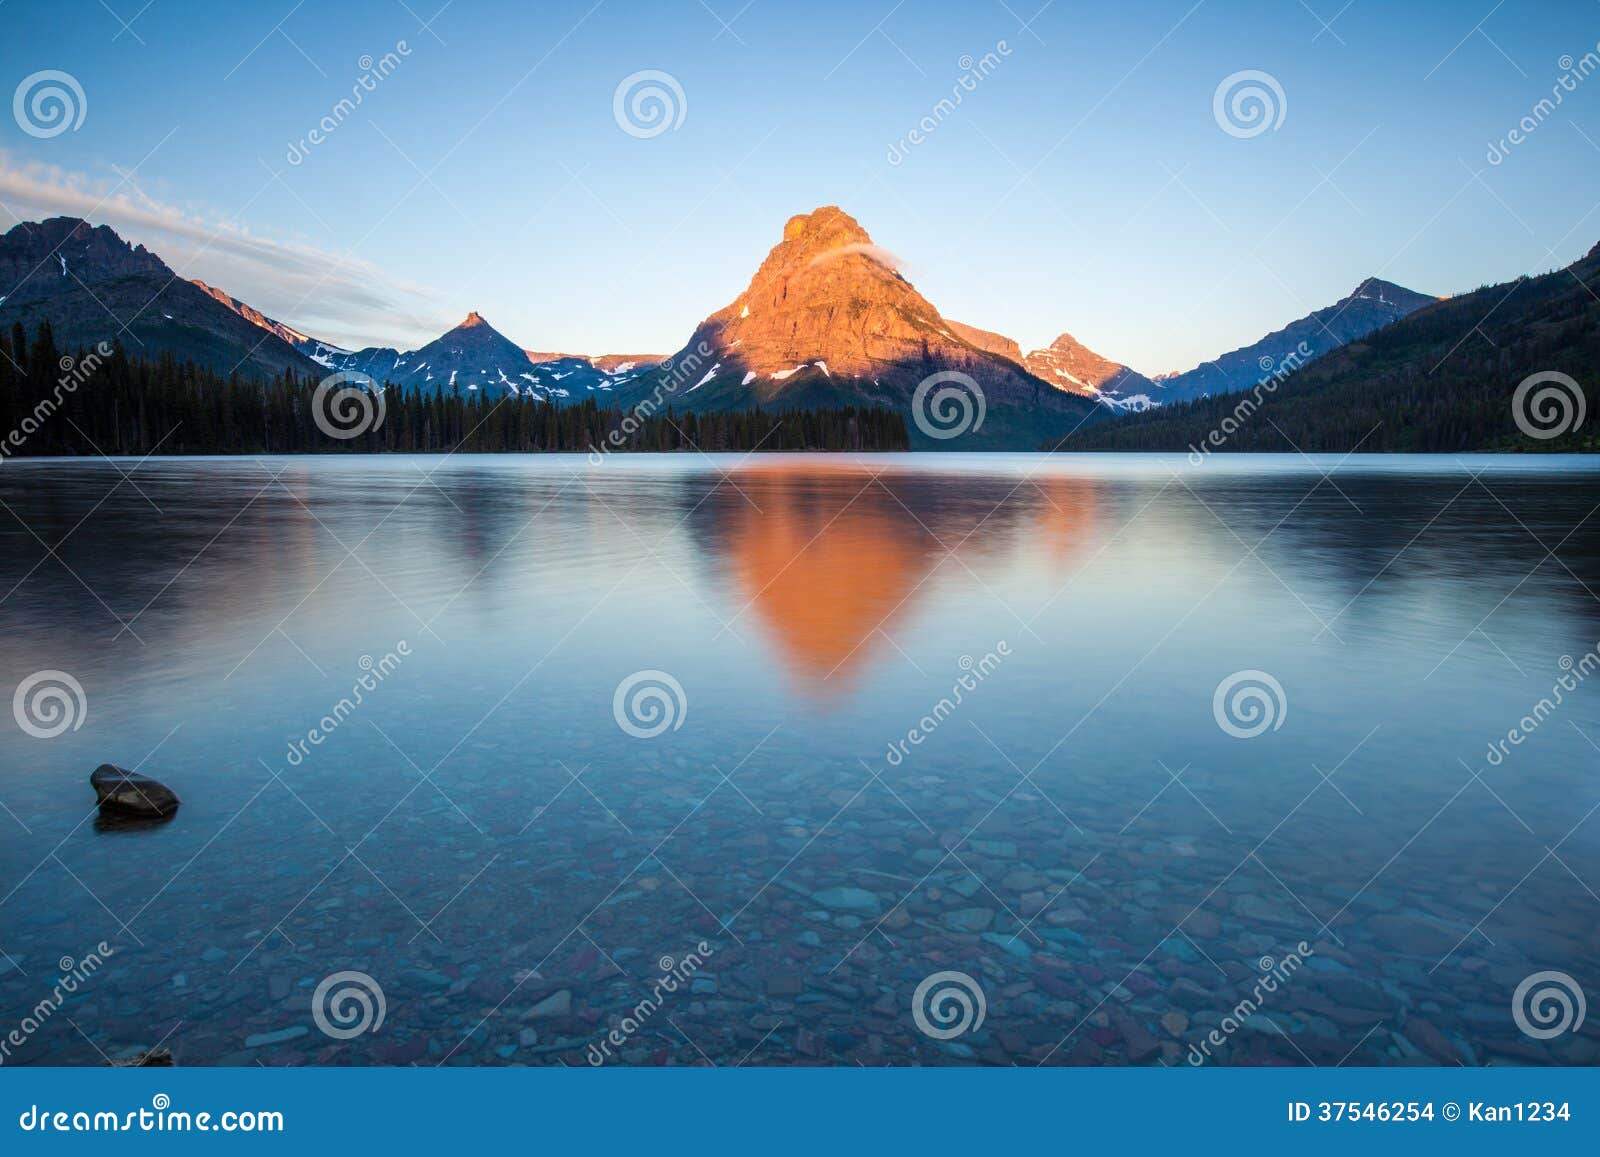 two medicine lake, glacier national park, in the morning